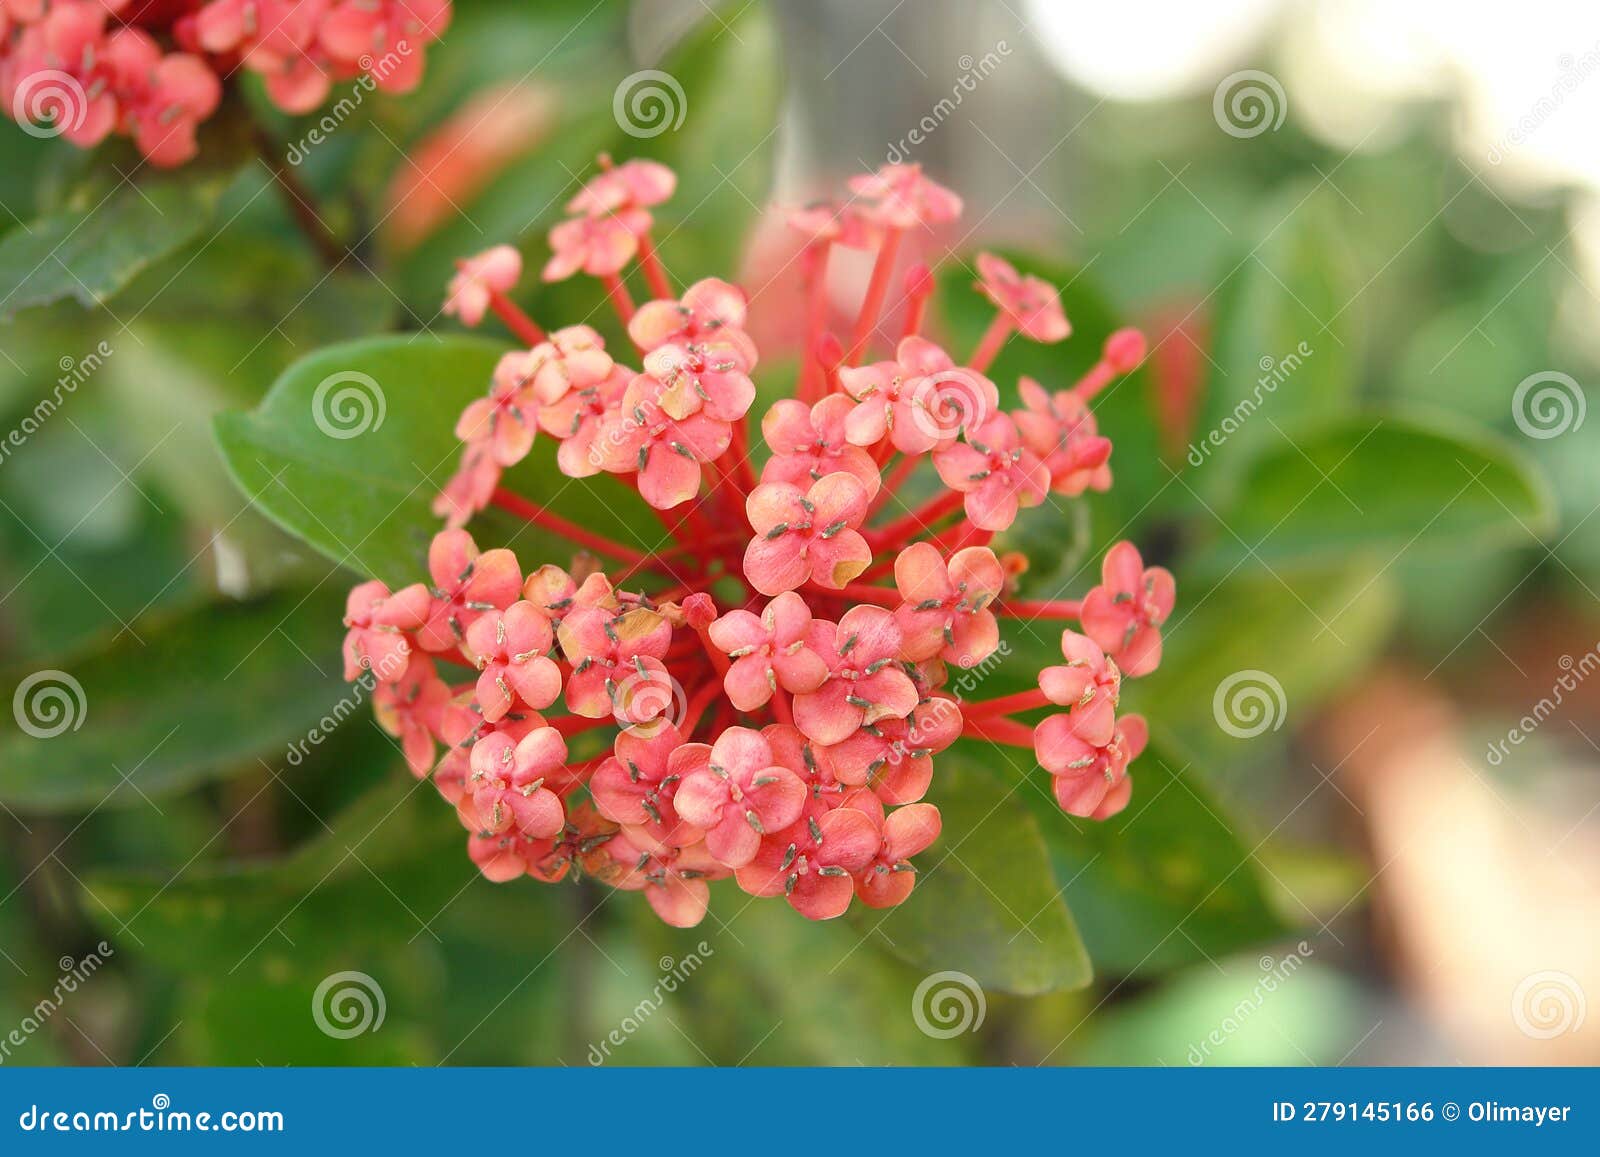 blooming branch of ashoka flower